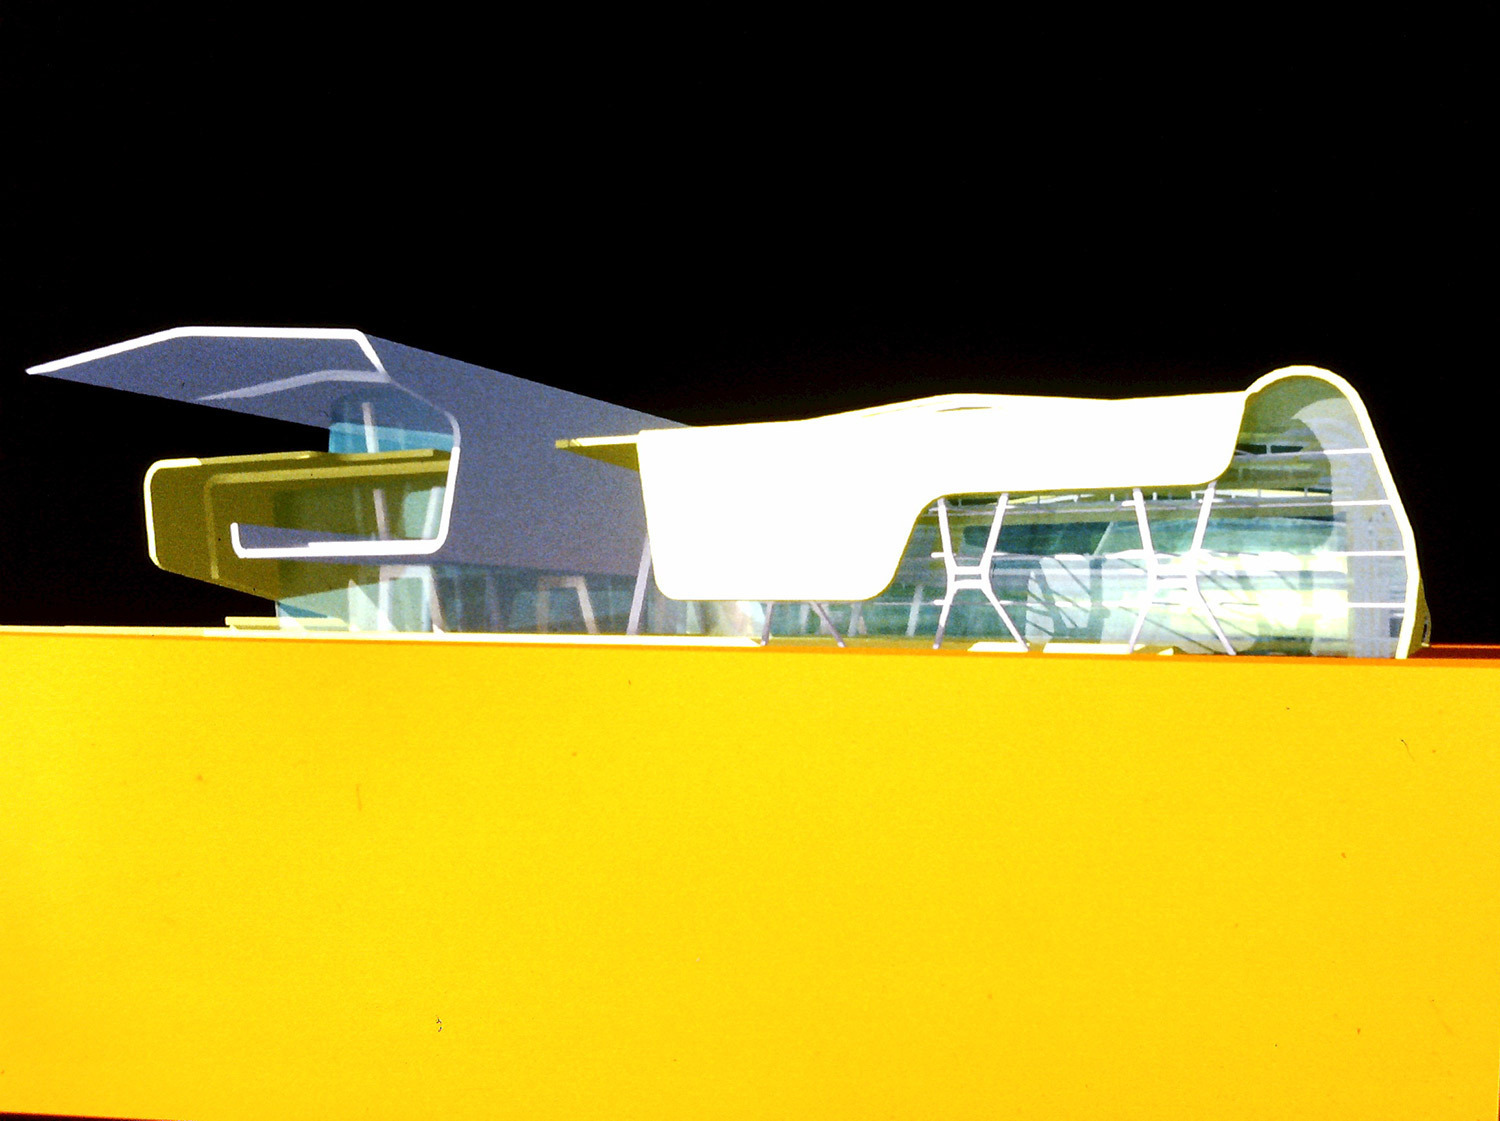 Project by Friedrich Tuczek for Neil Denari's spring 1997 vertical studio digital computer rendering building on yellow field